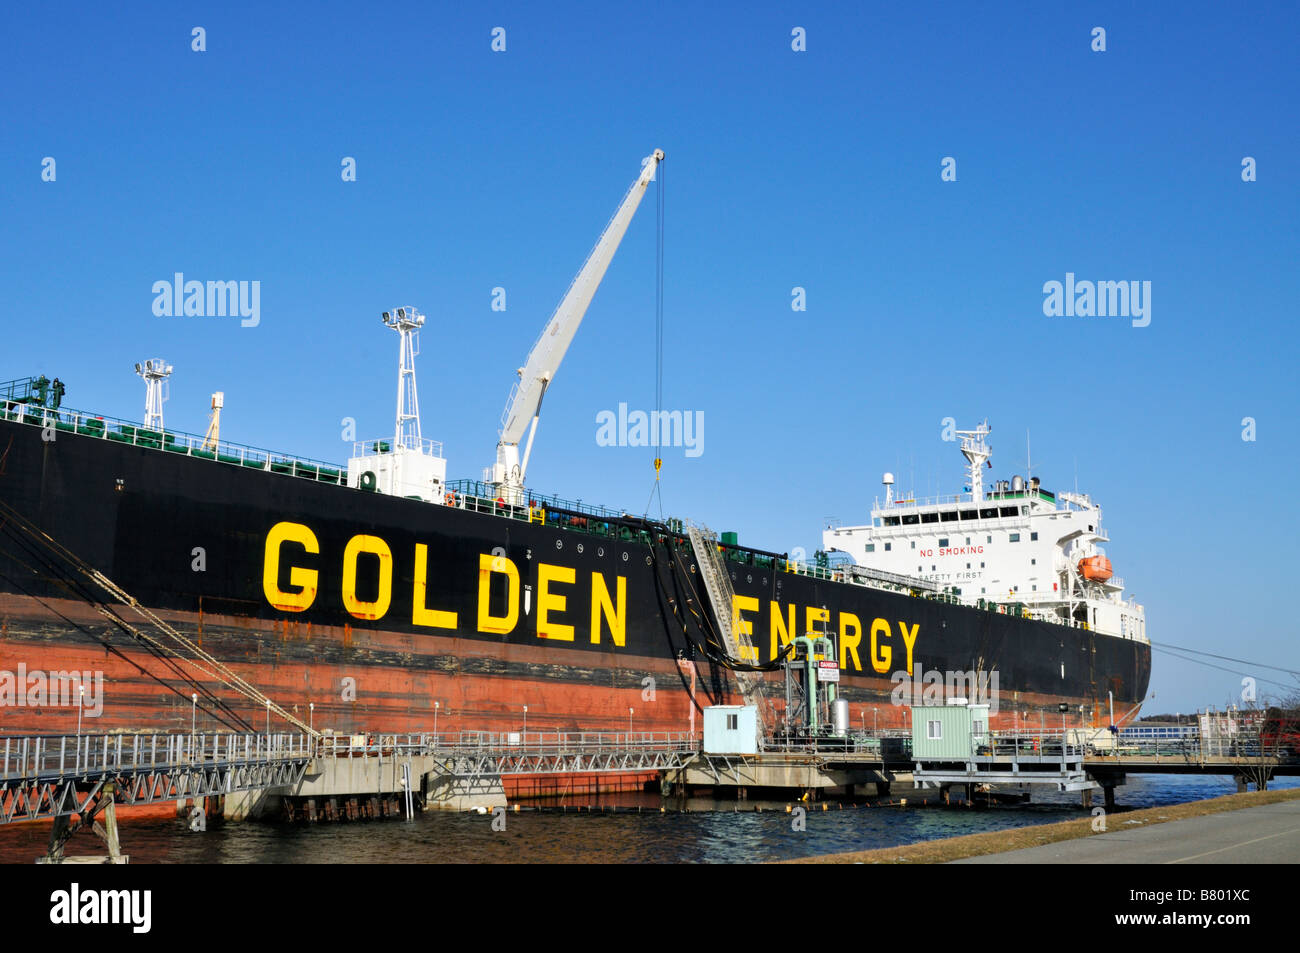 Fuel tanker Golden Energy  docked moored at marine terminal pier showing hose handling crane for offloading oil Stock Photo